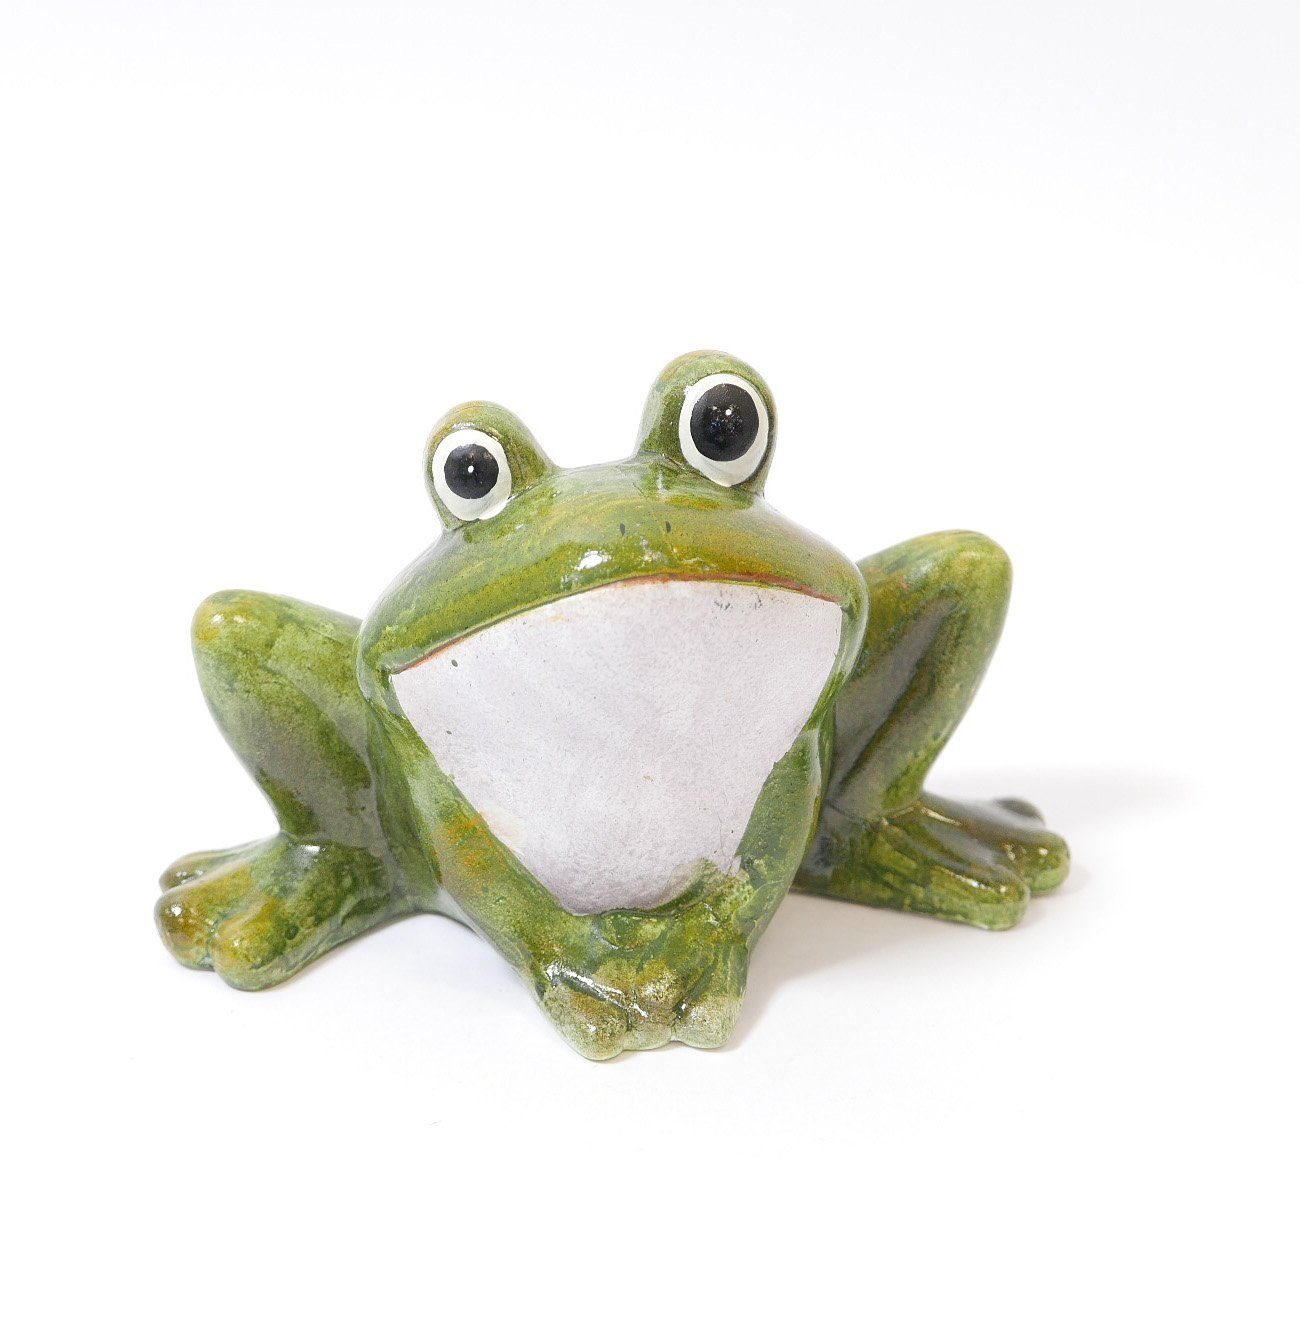 B&S Dekofigur Gartenfigur Frosch grün Keramik Dekofigur Gartendekoration Höhe 13 cm grün / grau